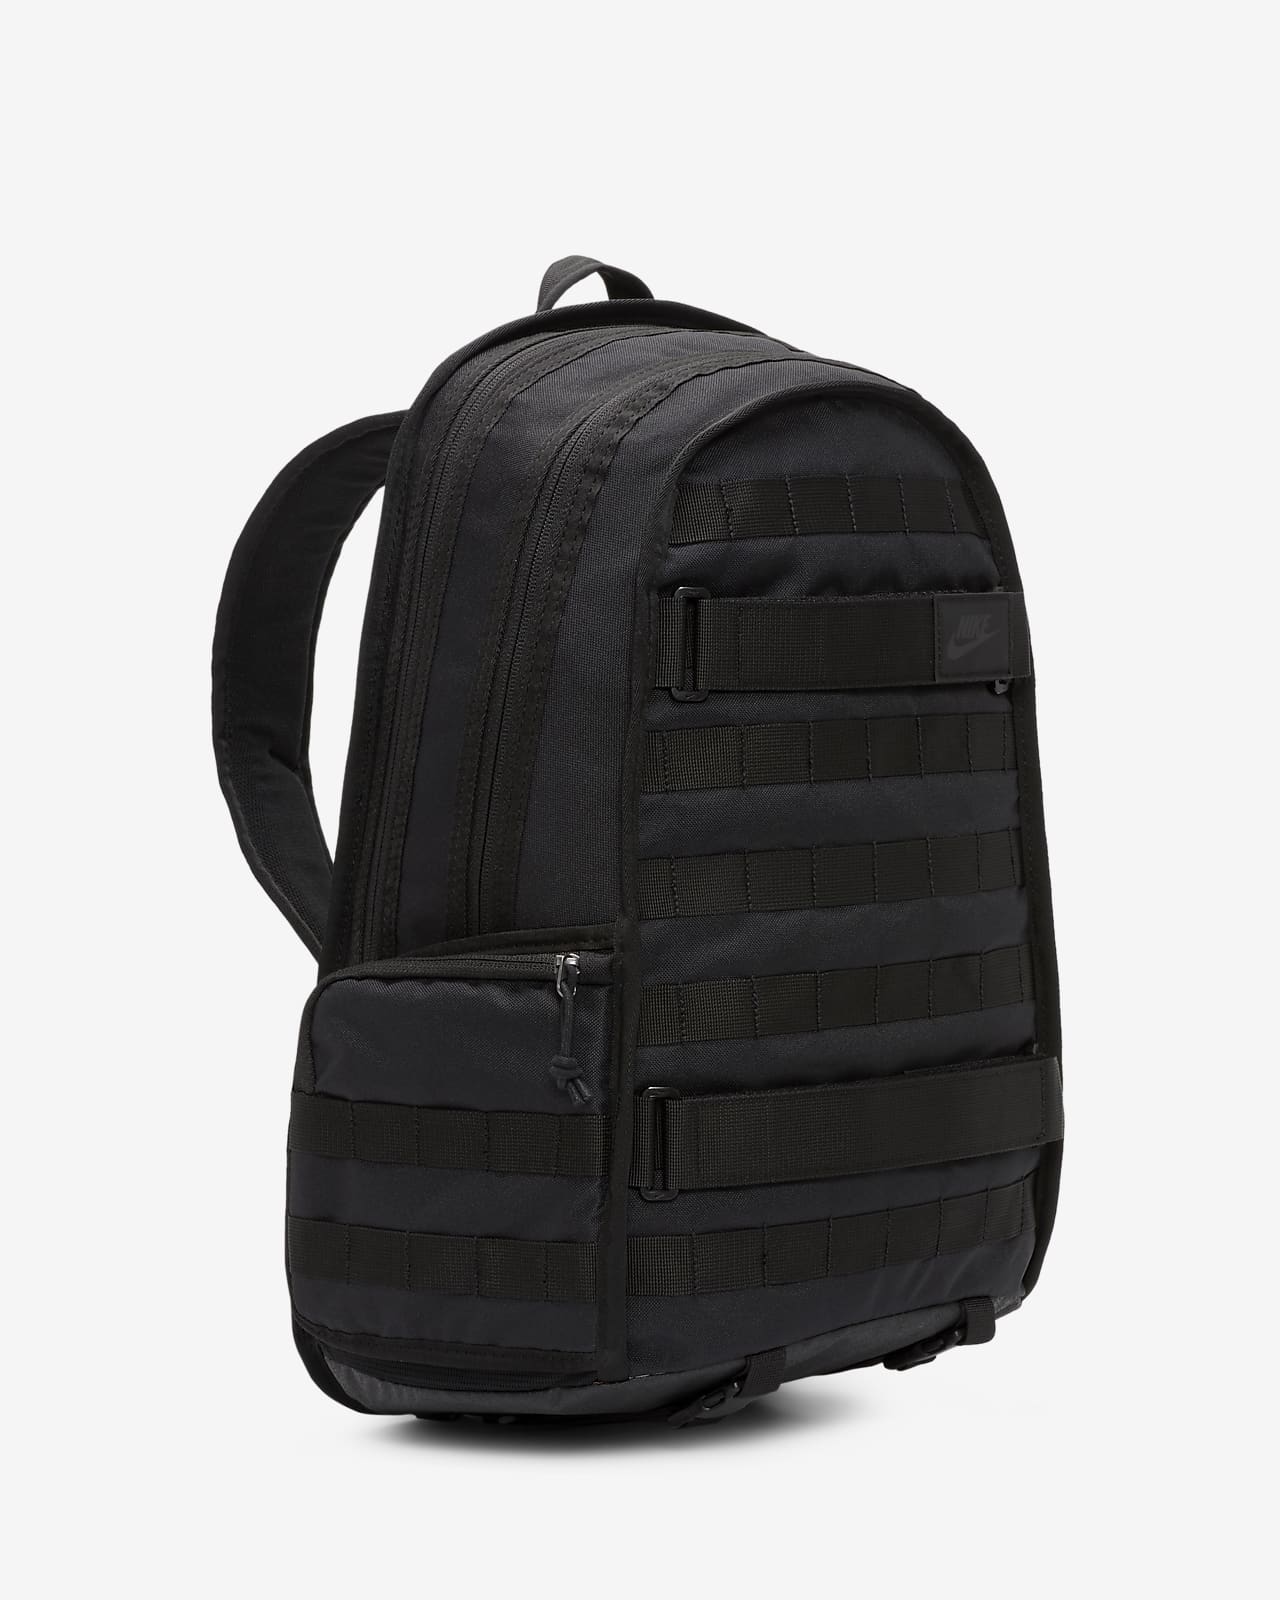 nike sportswear rpm backpack review